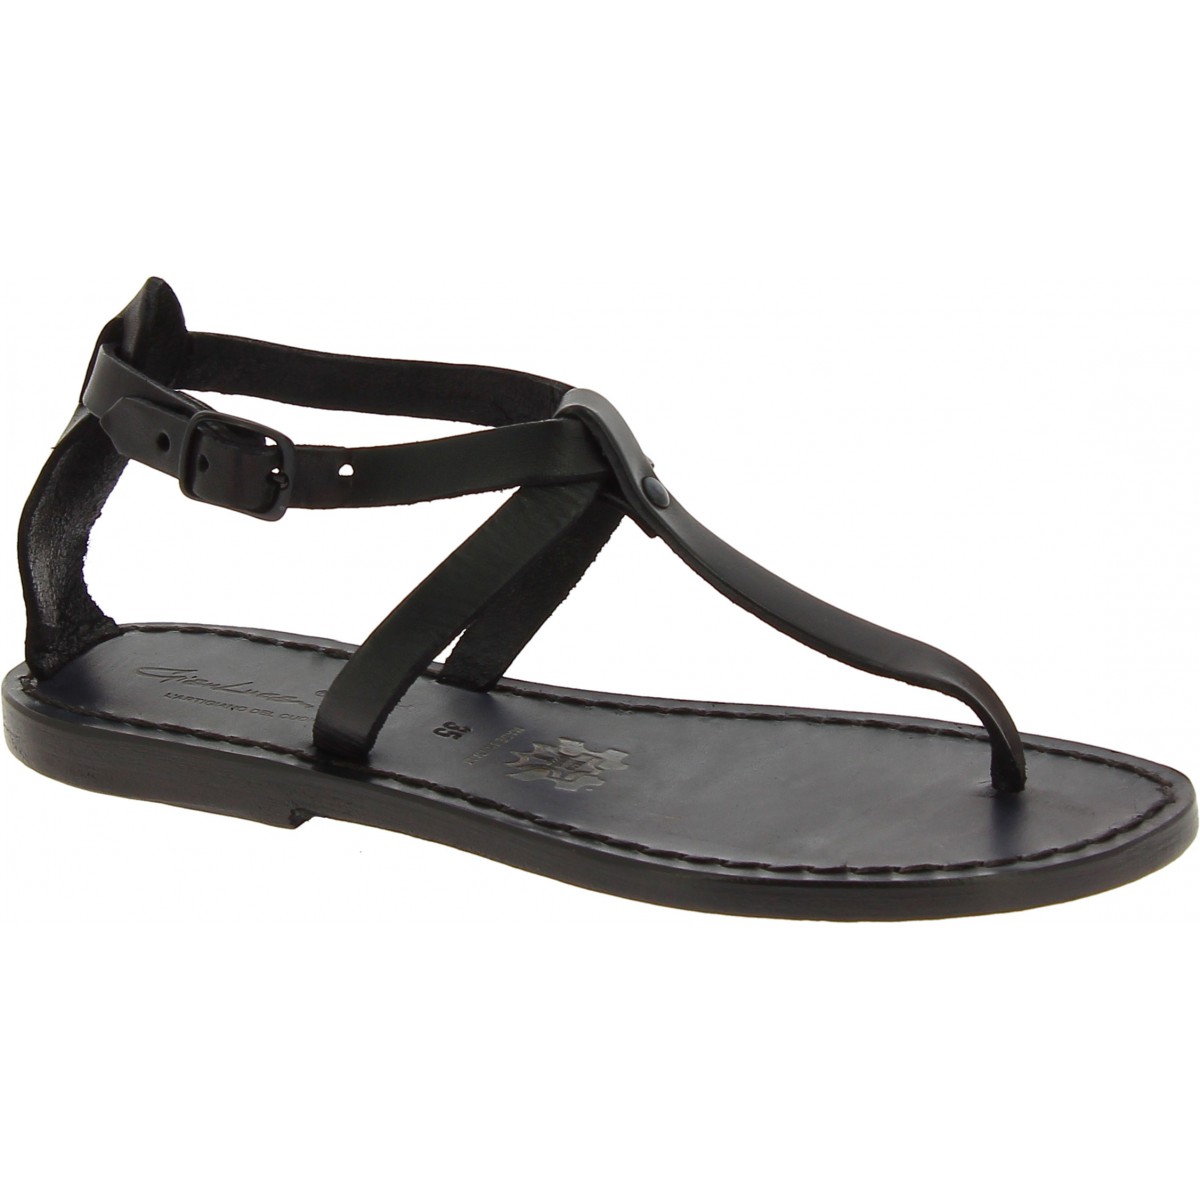 Details more than 153 black t strap flat sandals super hot - vietkidsiq ...